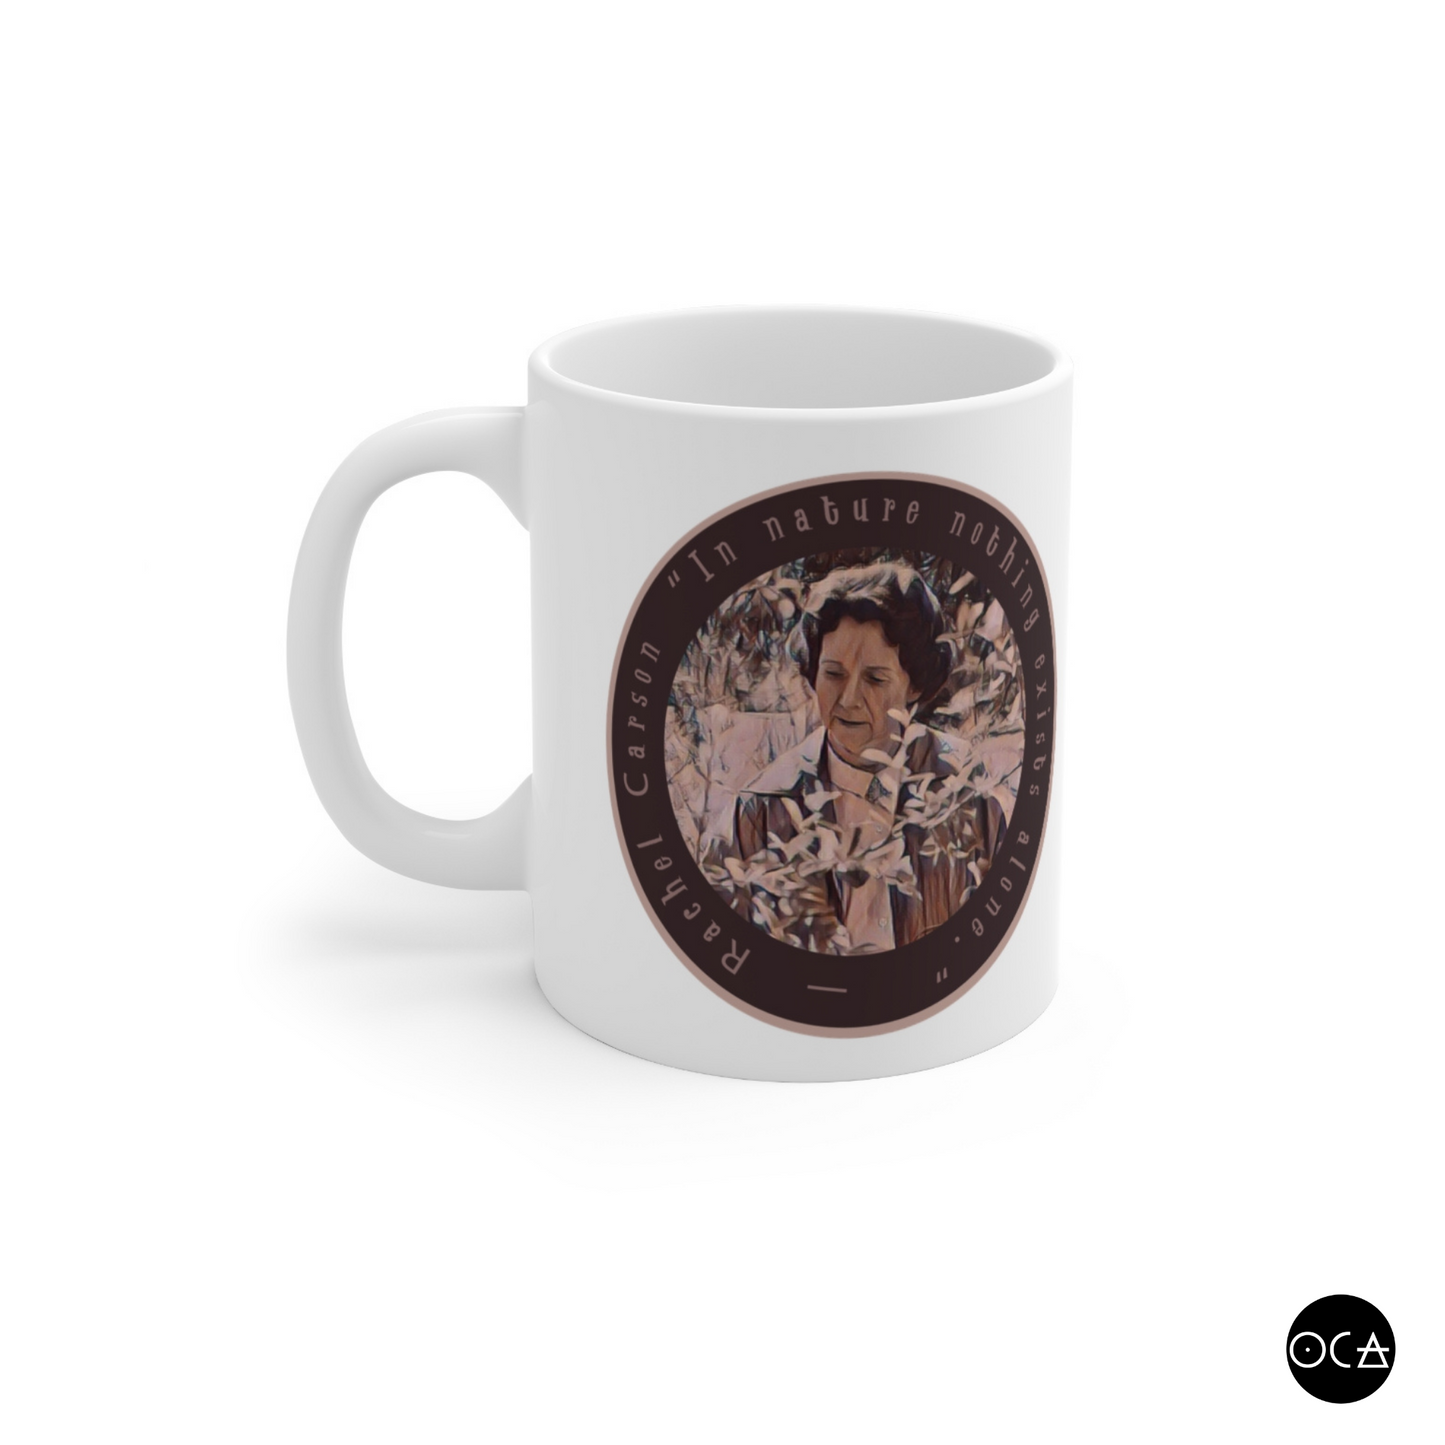 Rachel Carson Doublesided Mug (2 Different Design Options)